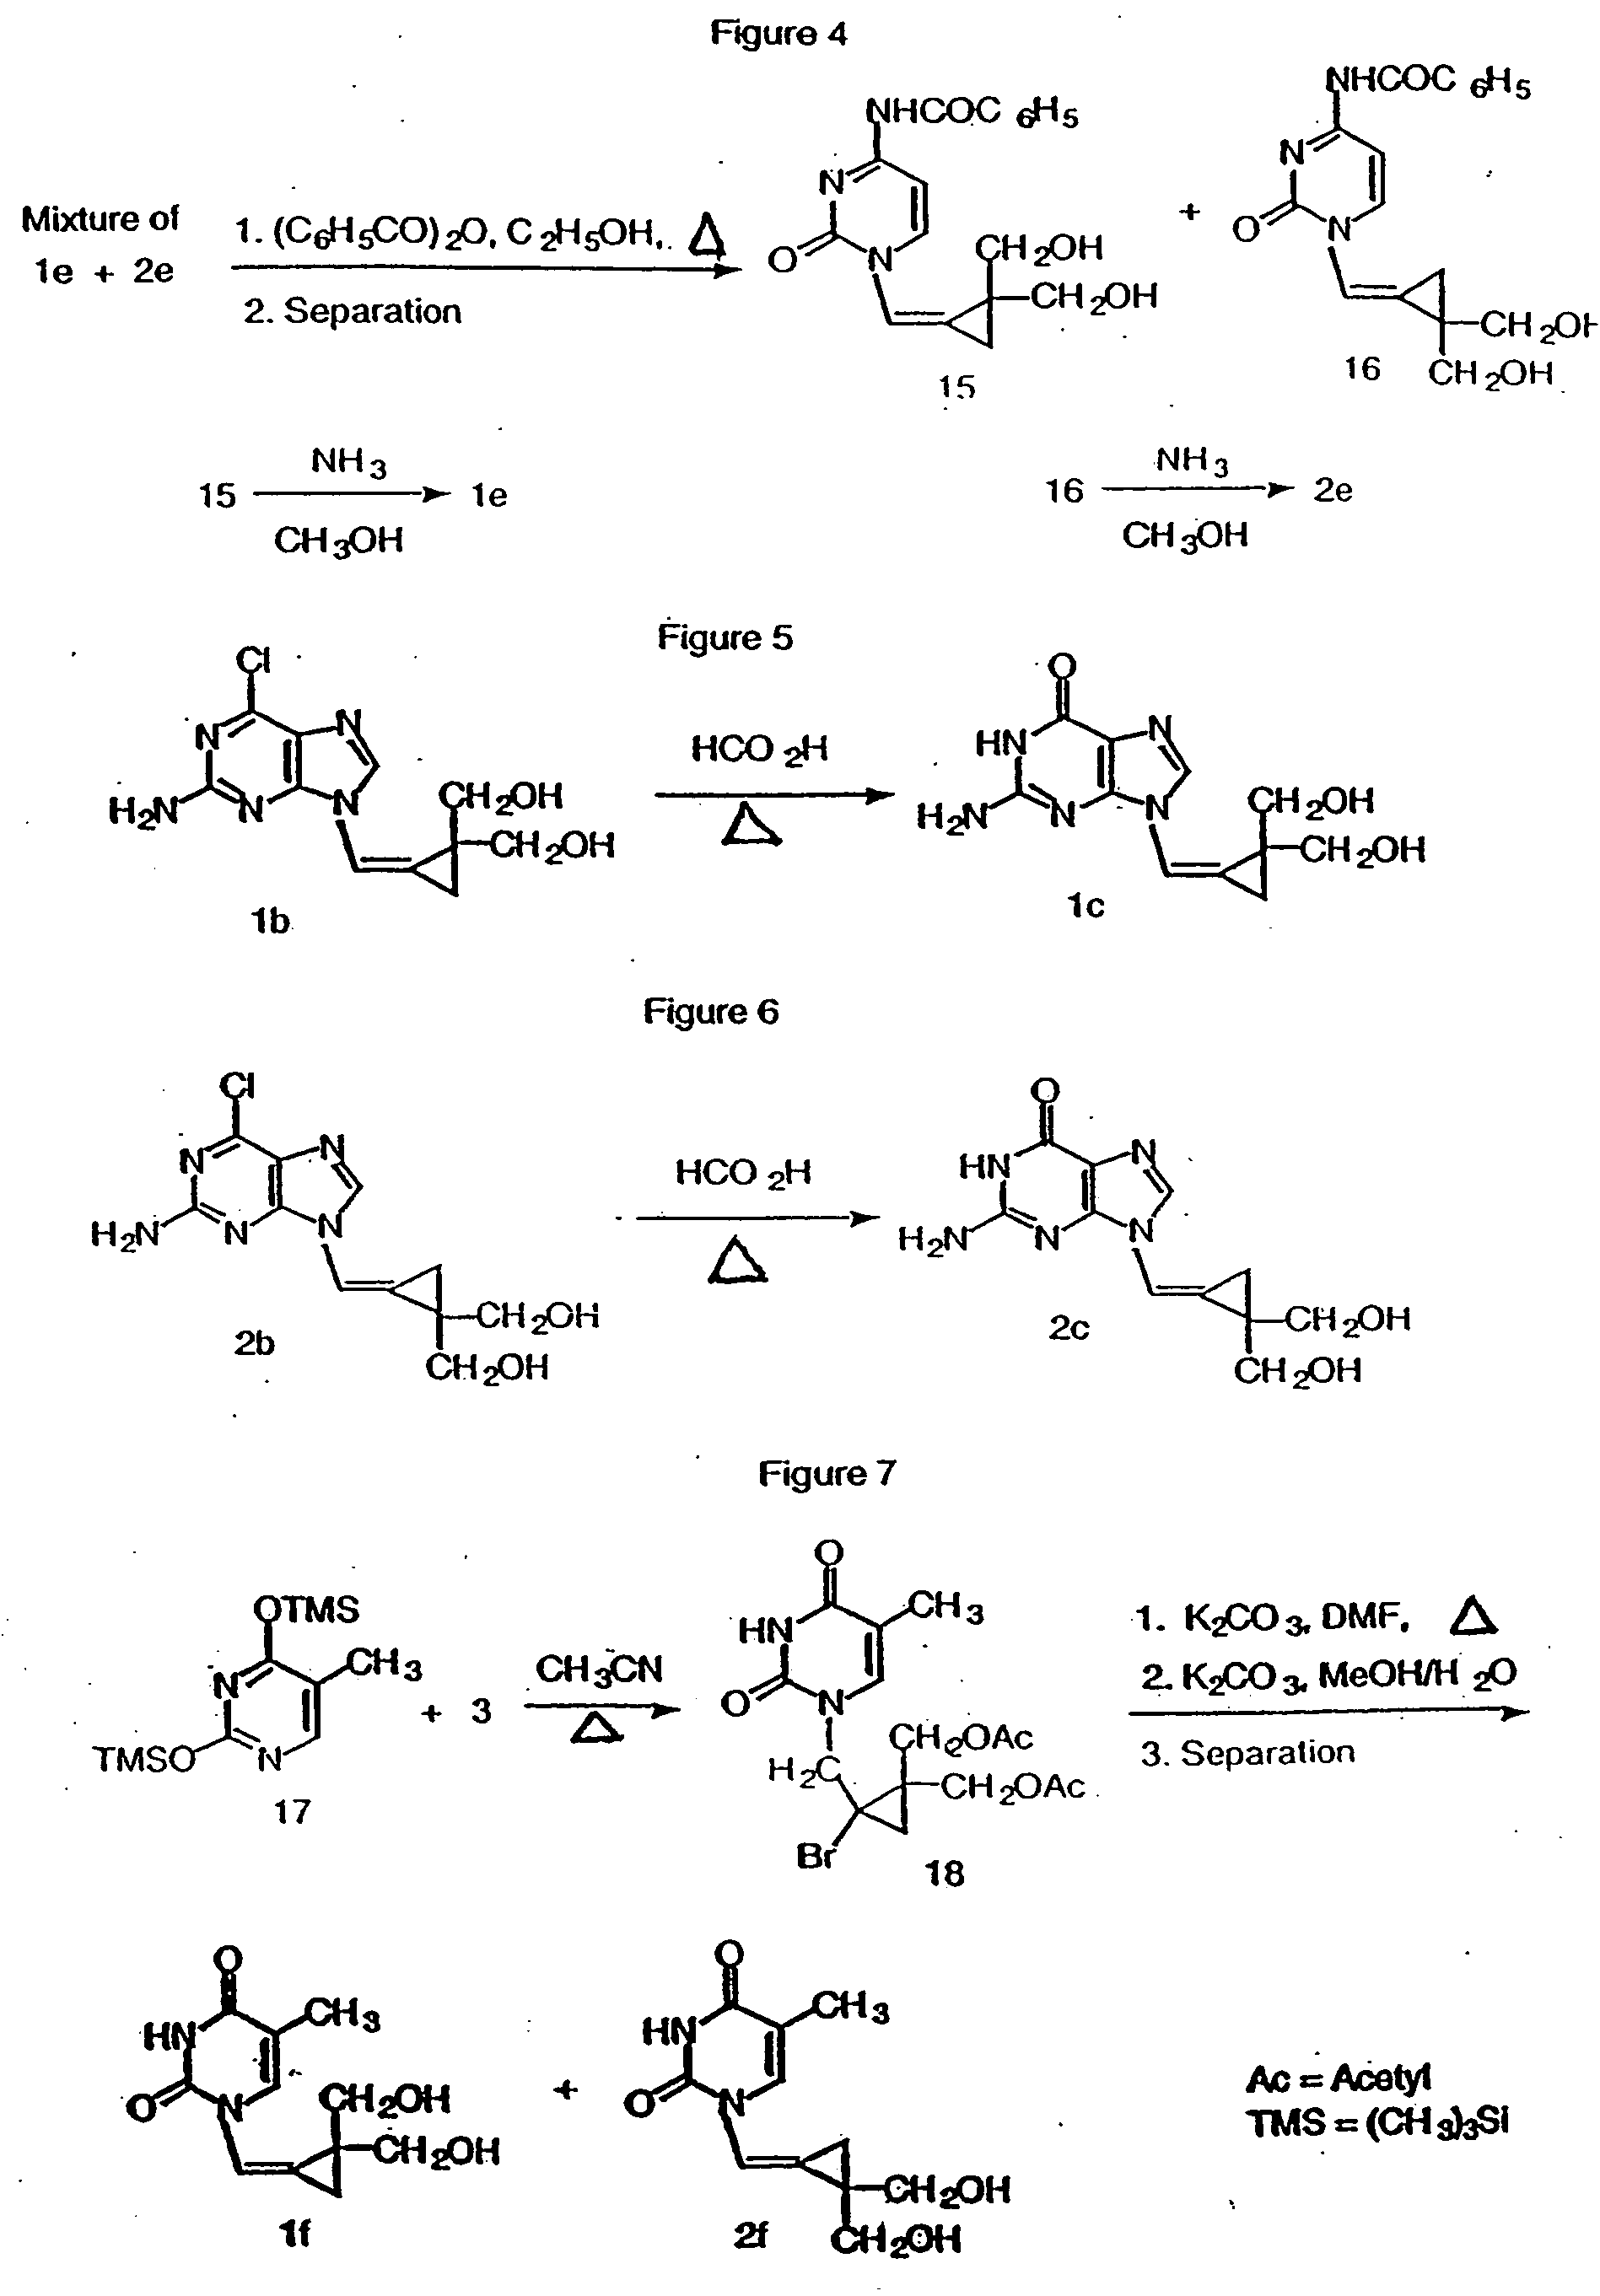 2,2-bis-(hydroxymethyl)cyclopropylidenemethyl-purines and pyrmindines as antiviral agents